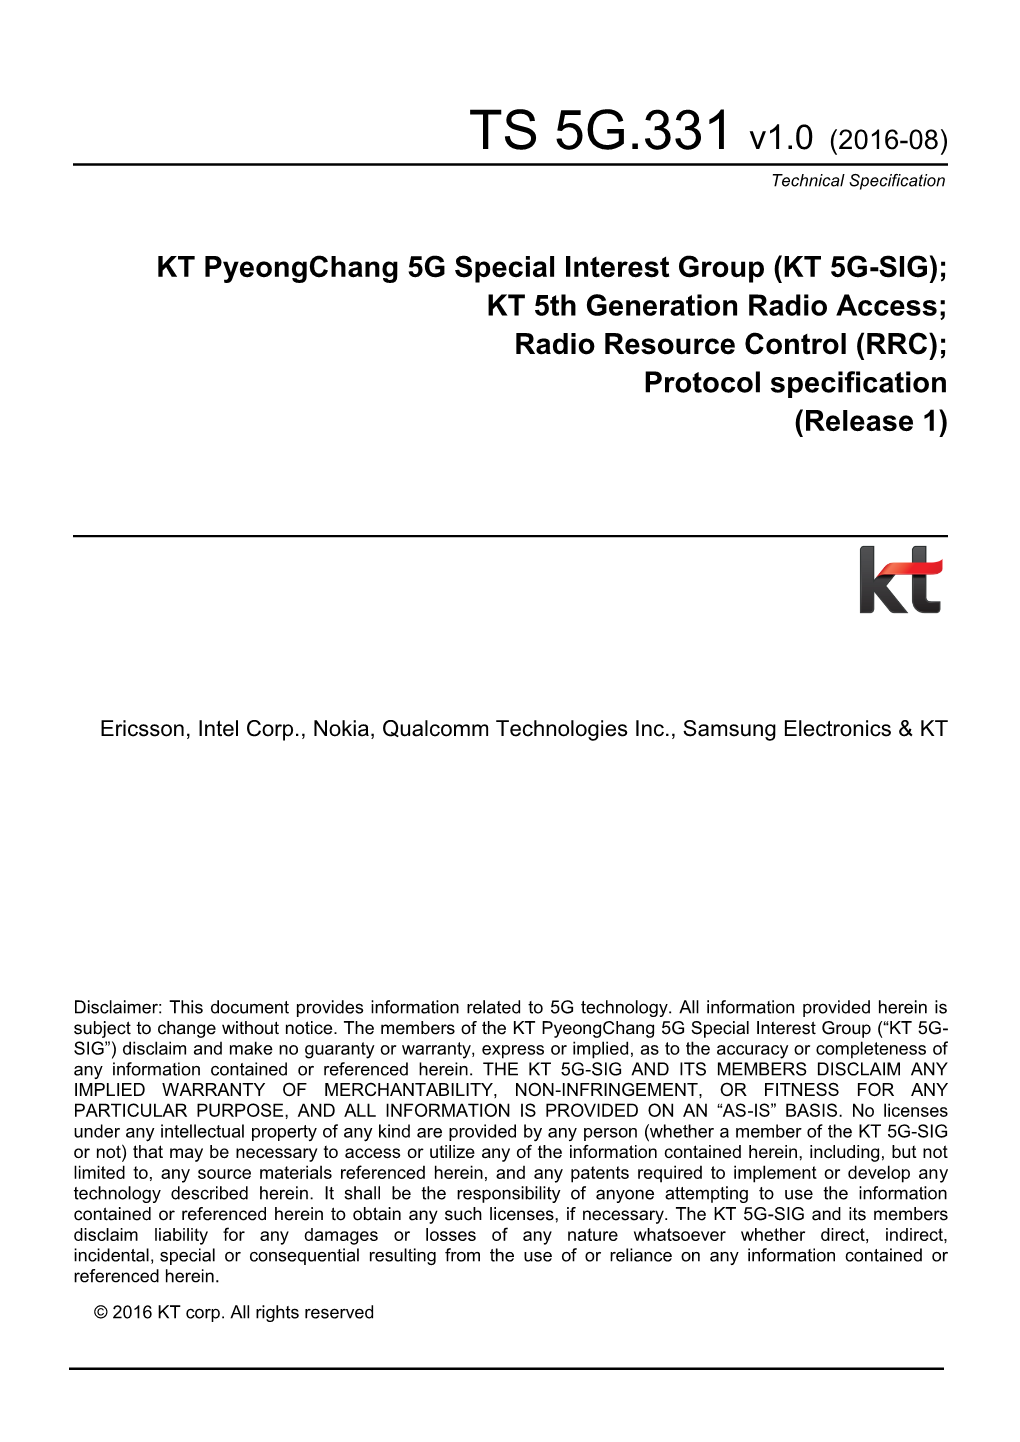 TS 5G.331 V1.0 (2016-08) Technical Specification